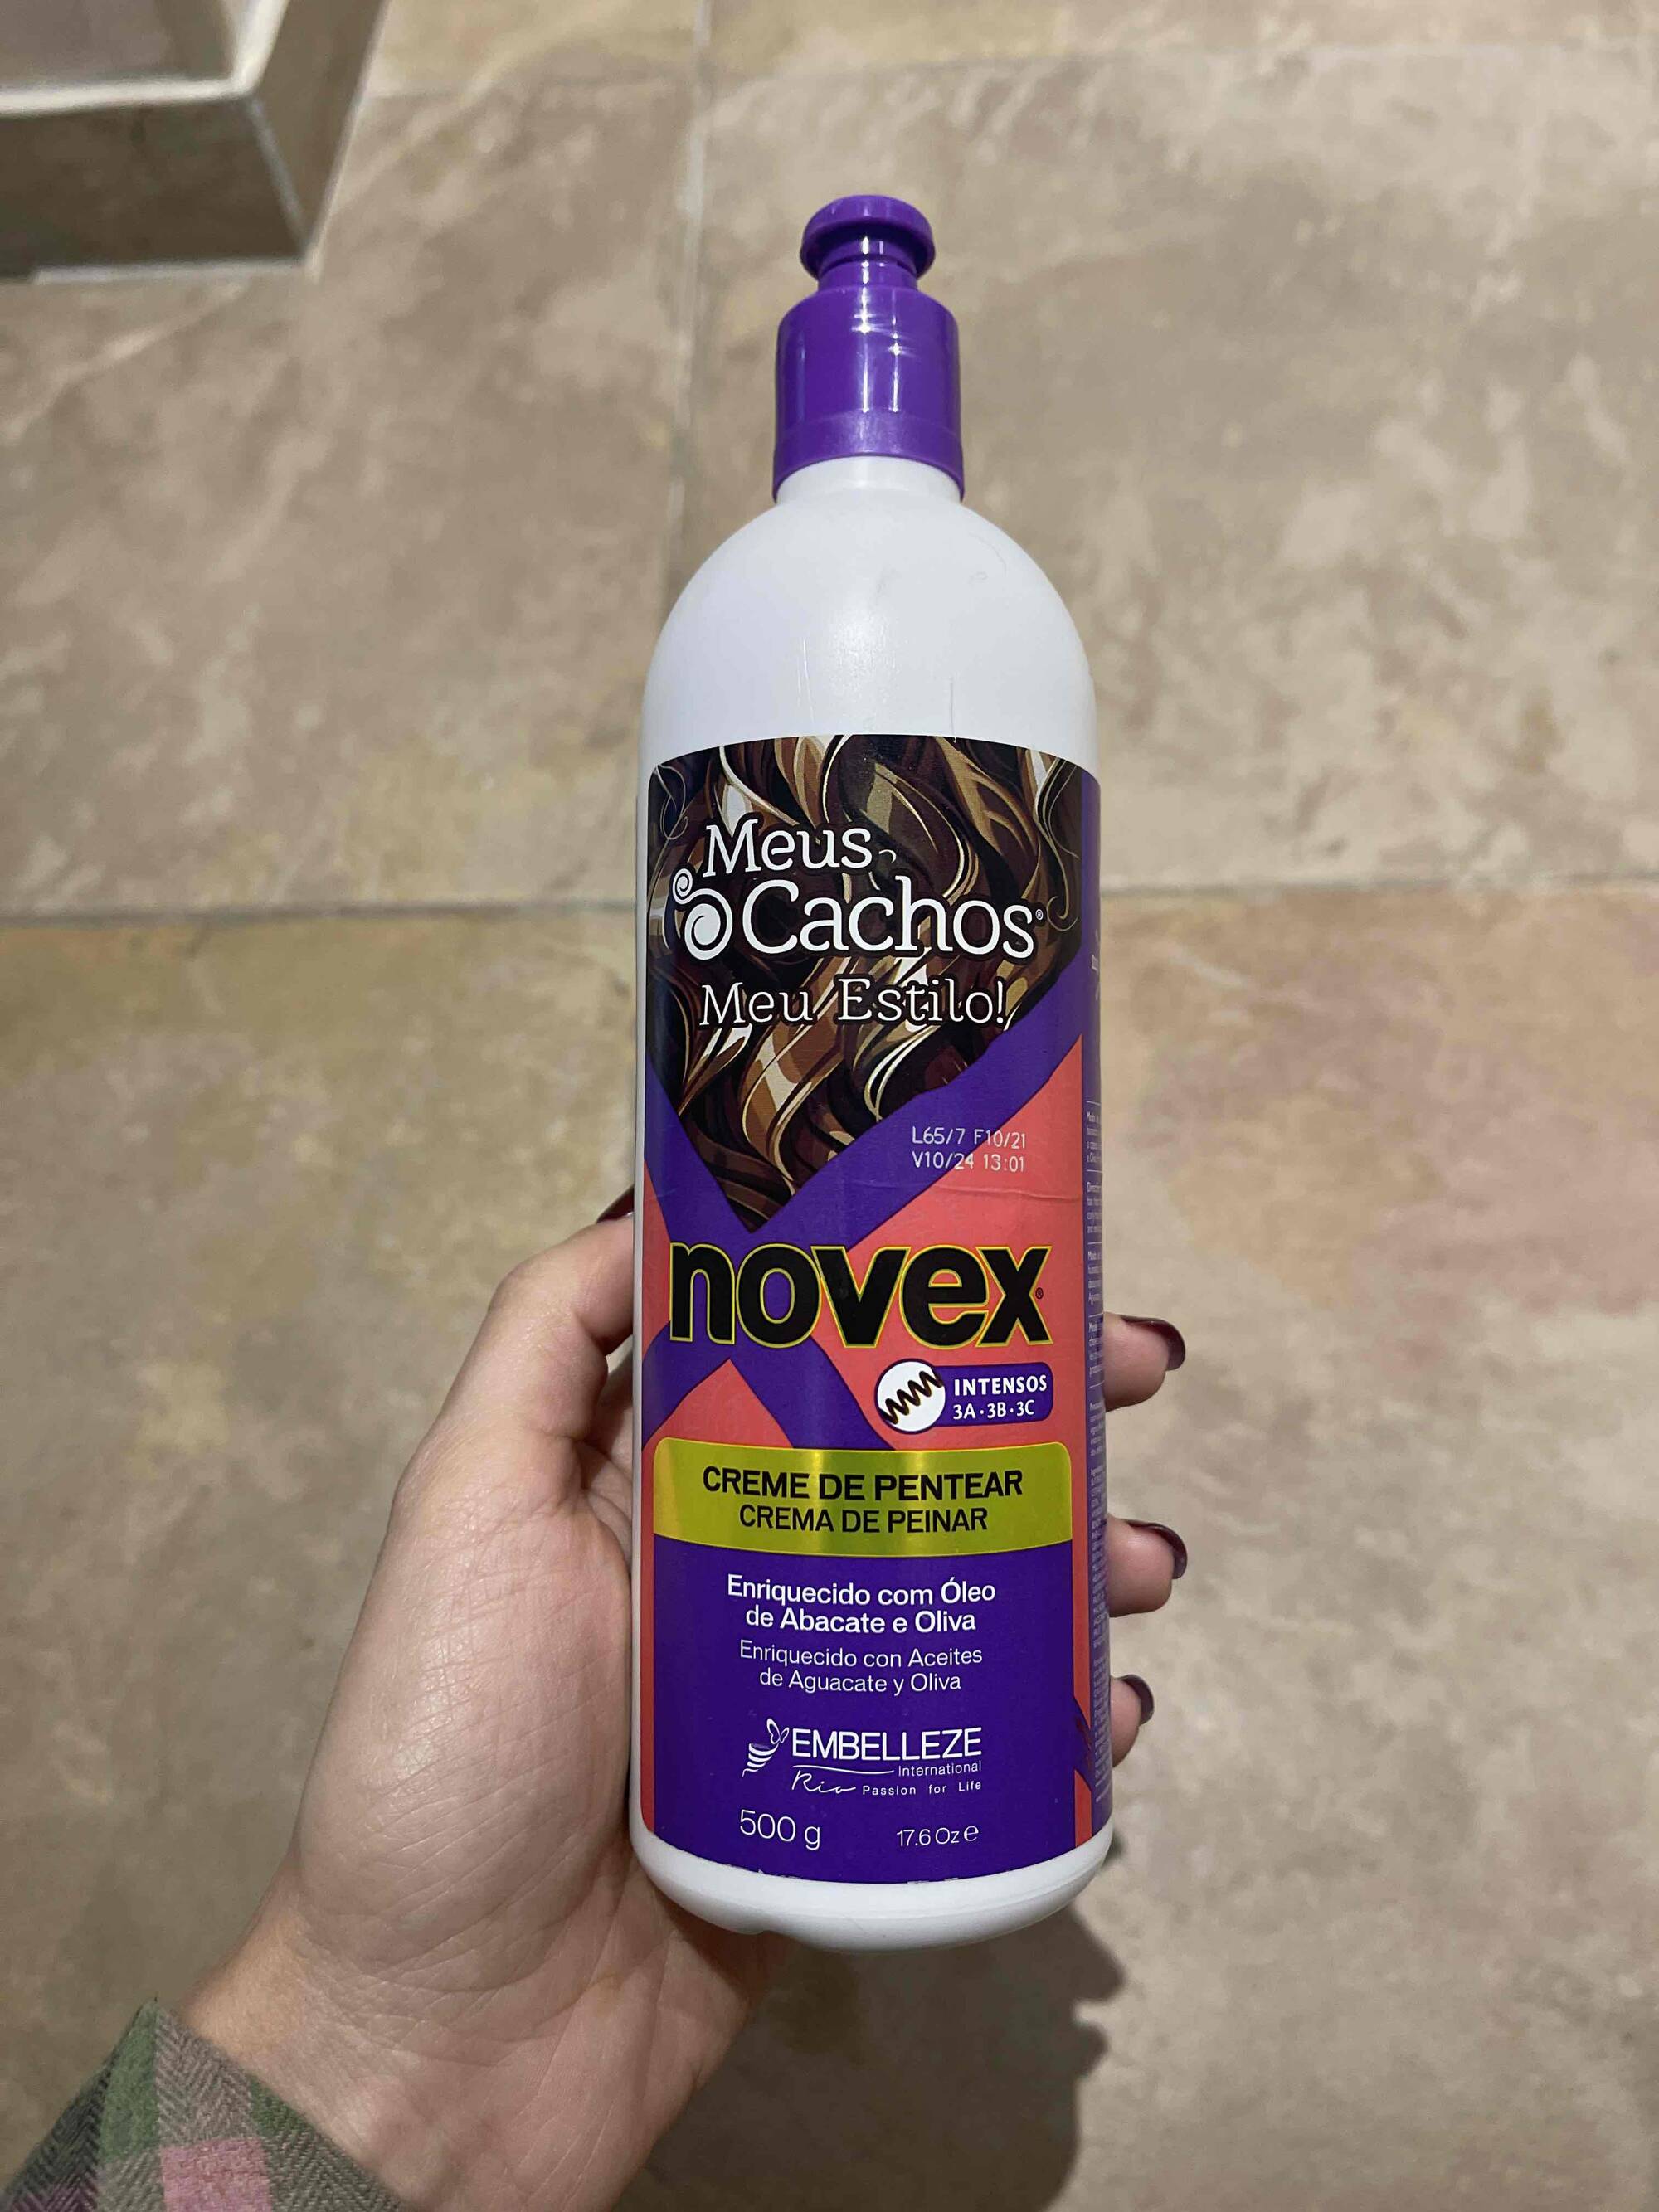 EMBELLEZE - Novex - Après shampoing